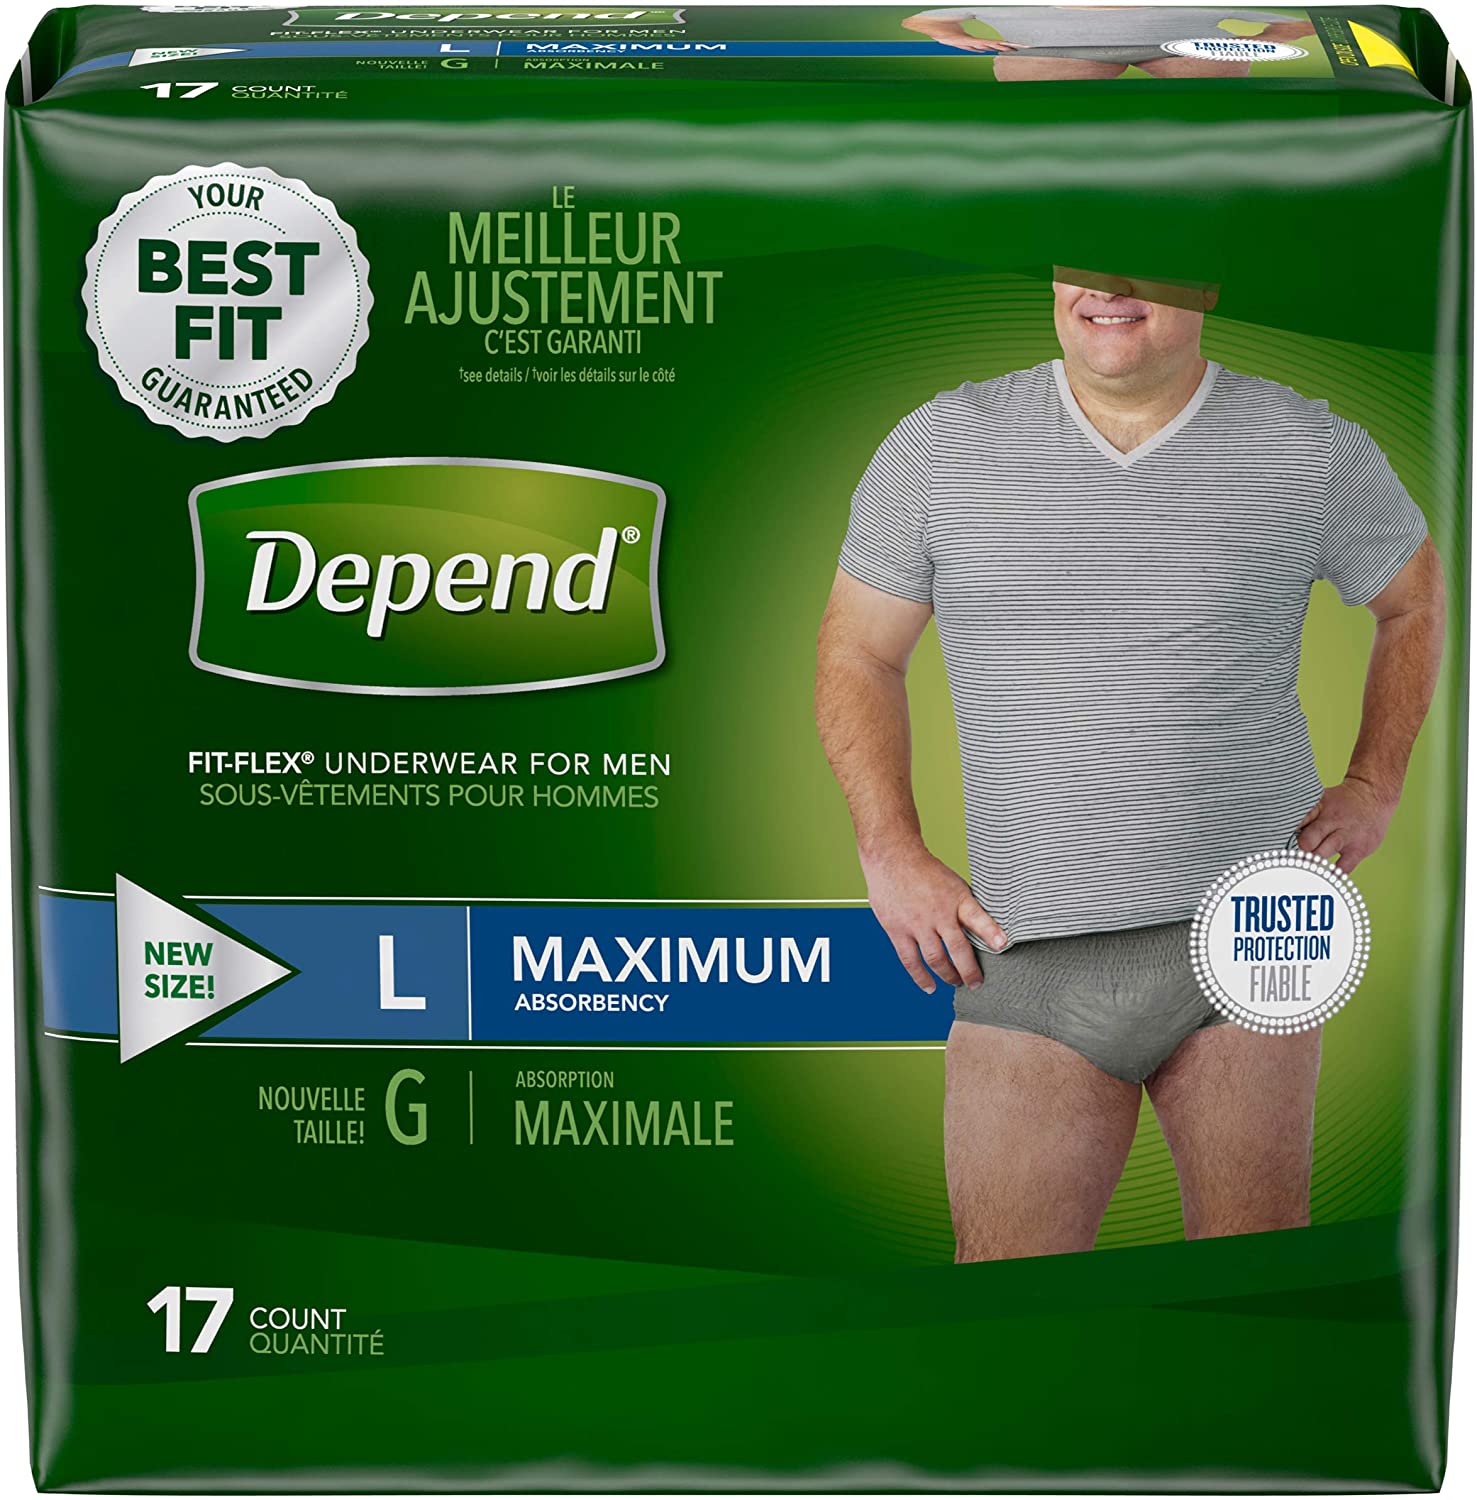 Depend Maximum Absorbency XL Underwear for Women - 14 CT